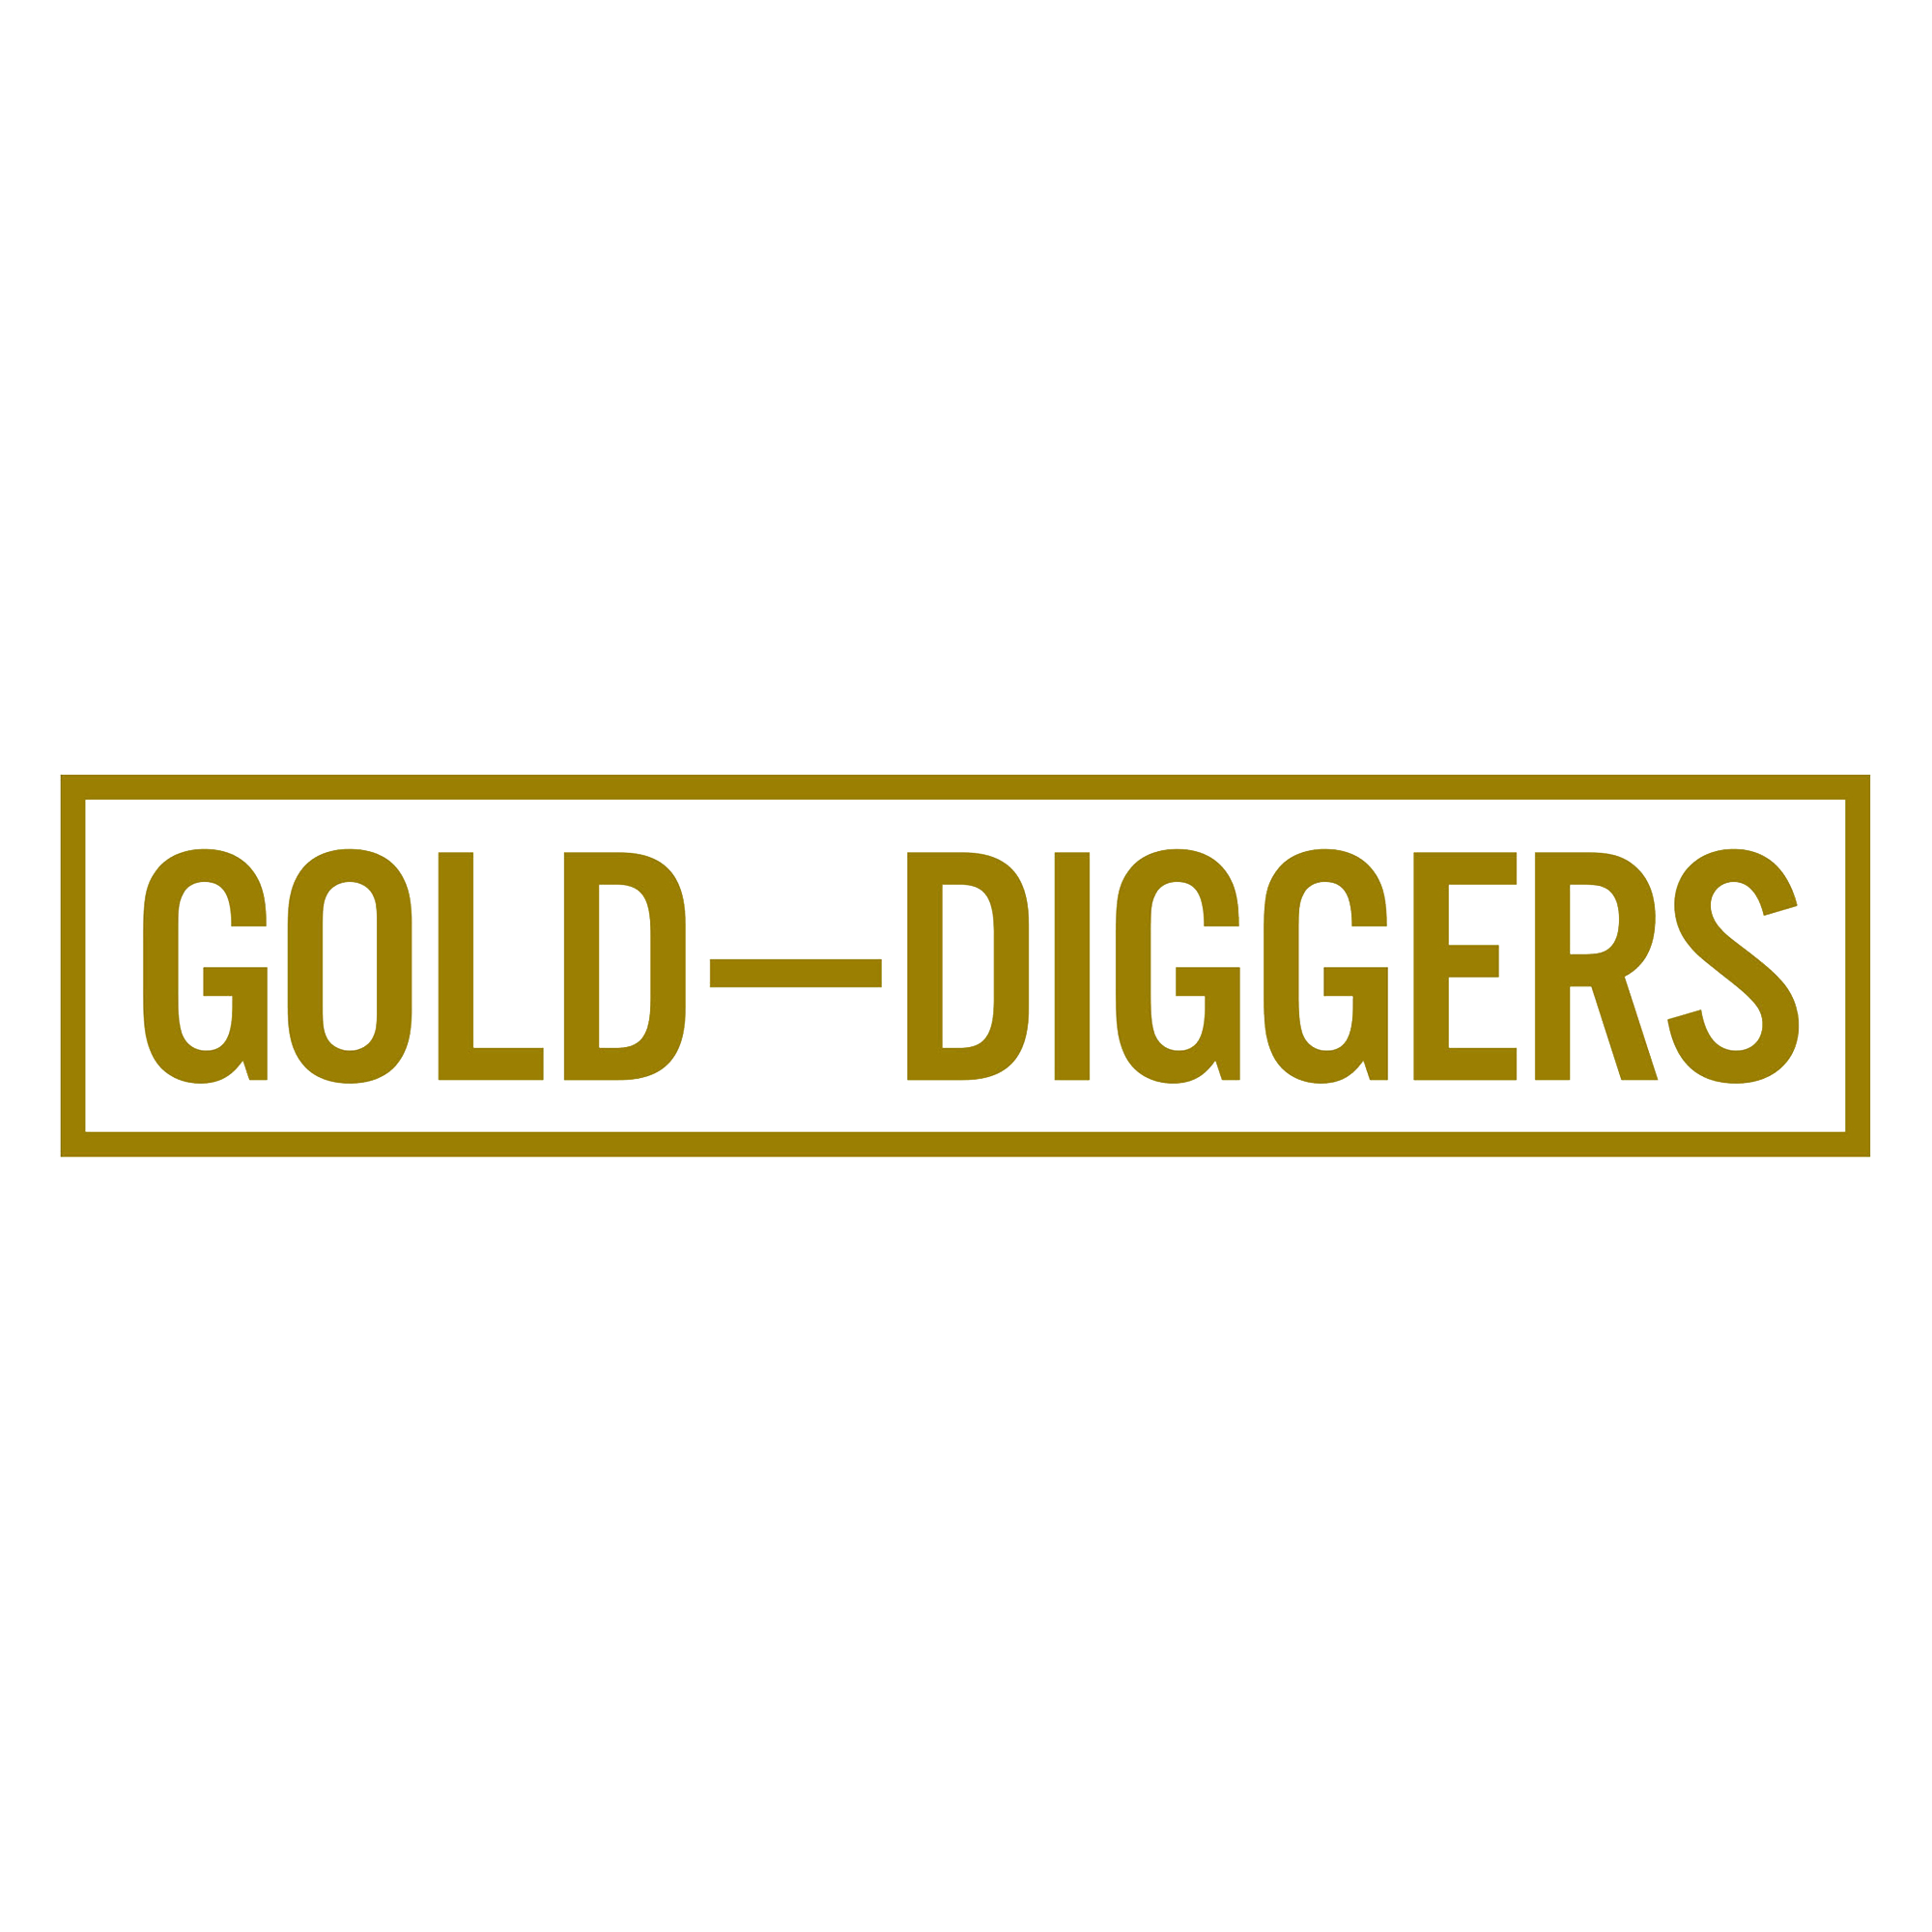 06gold diggers.png